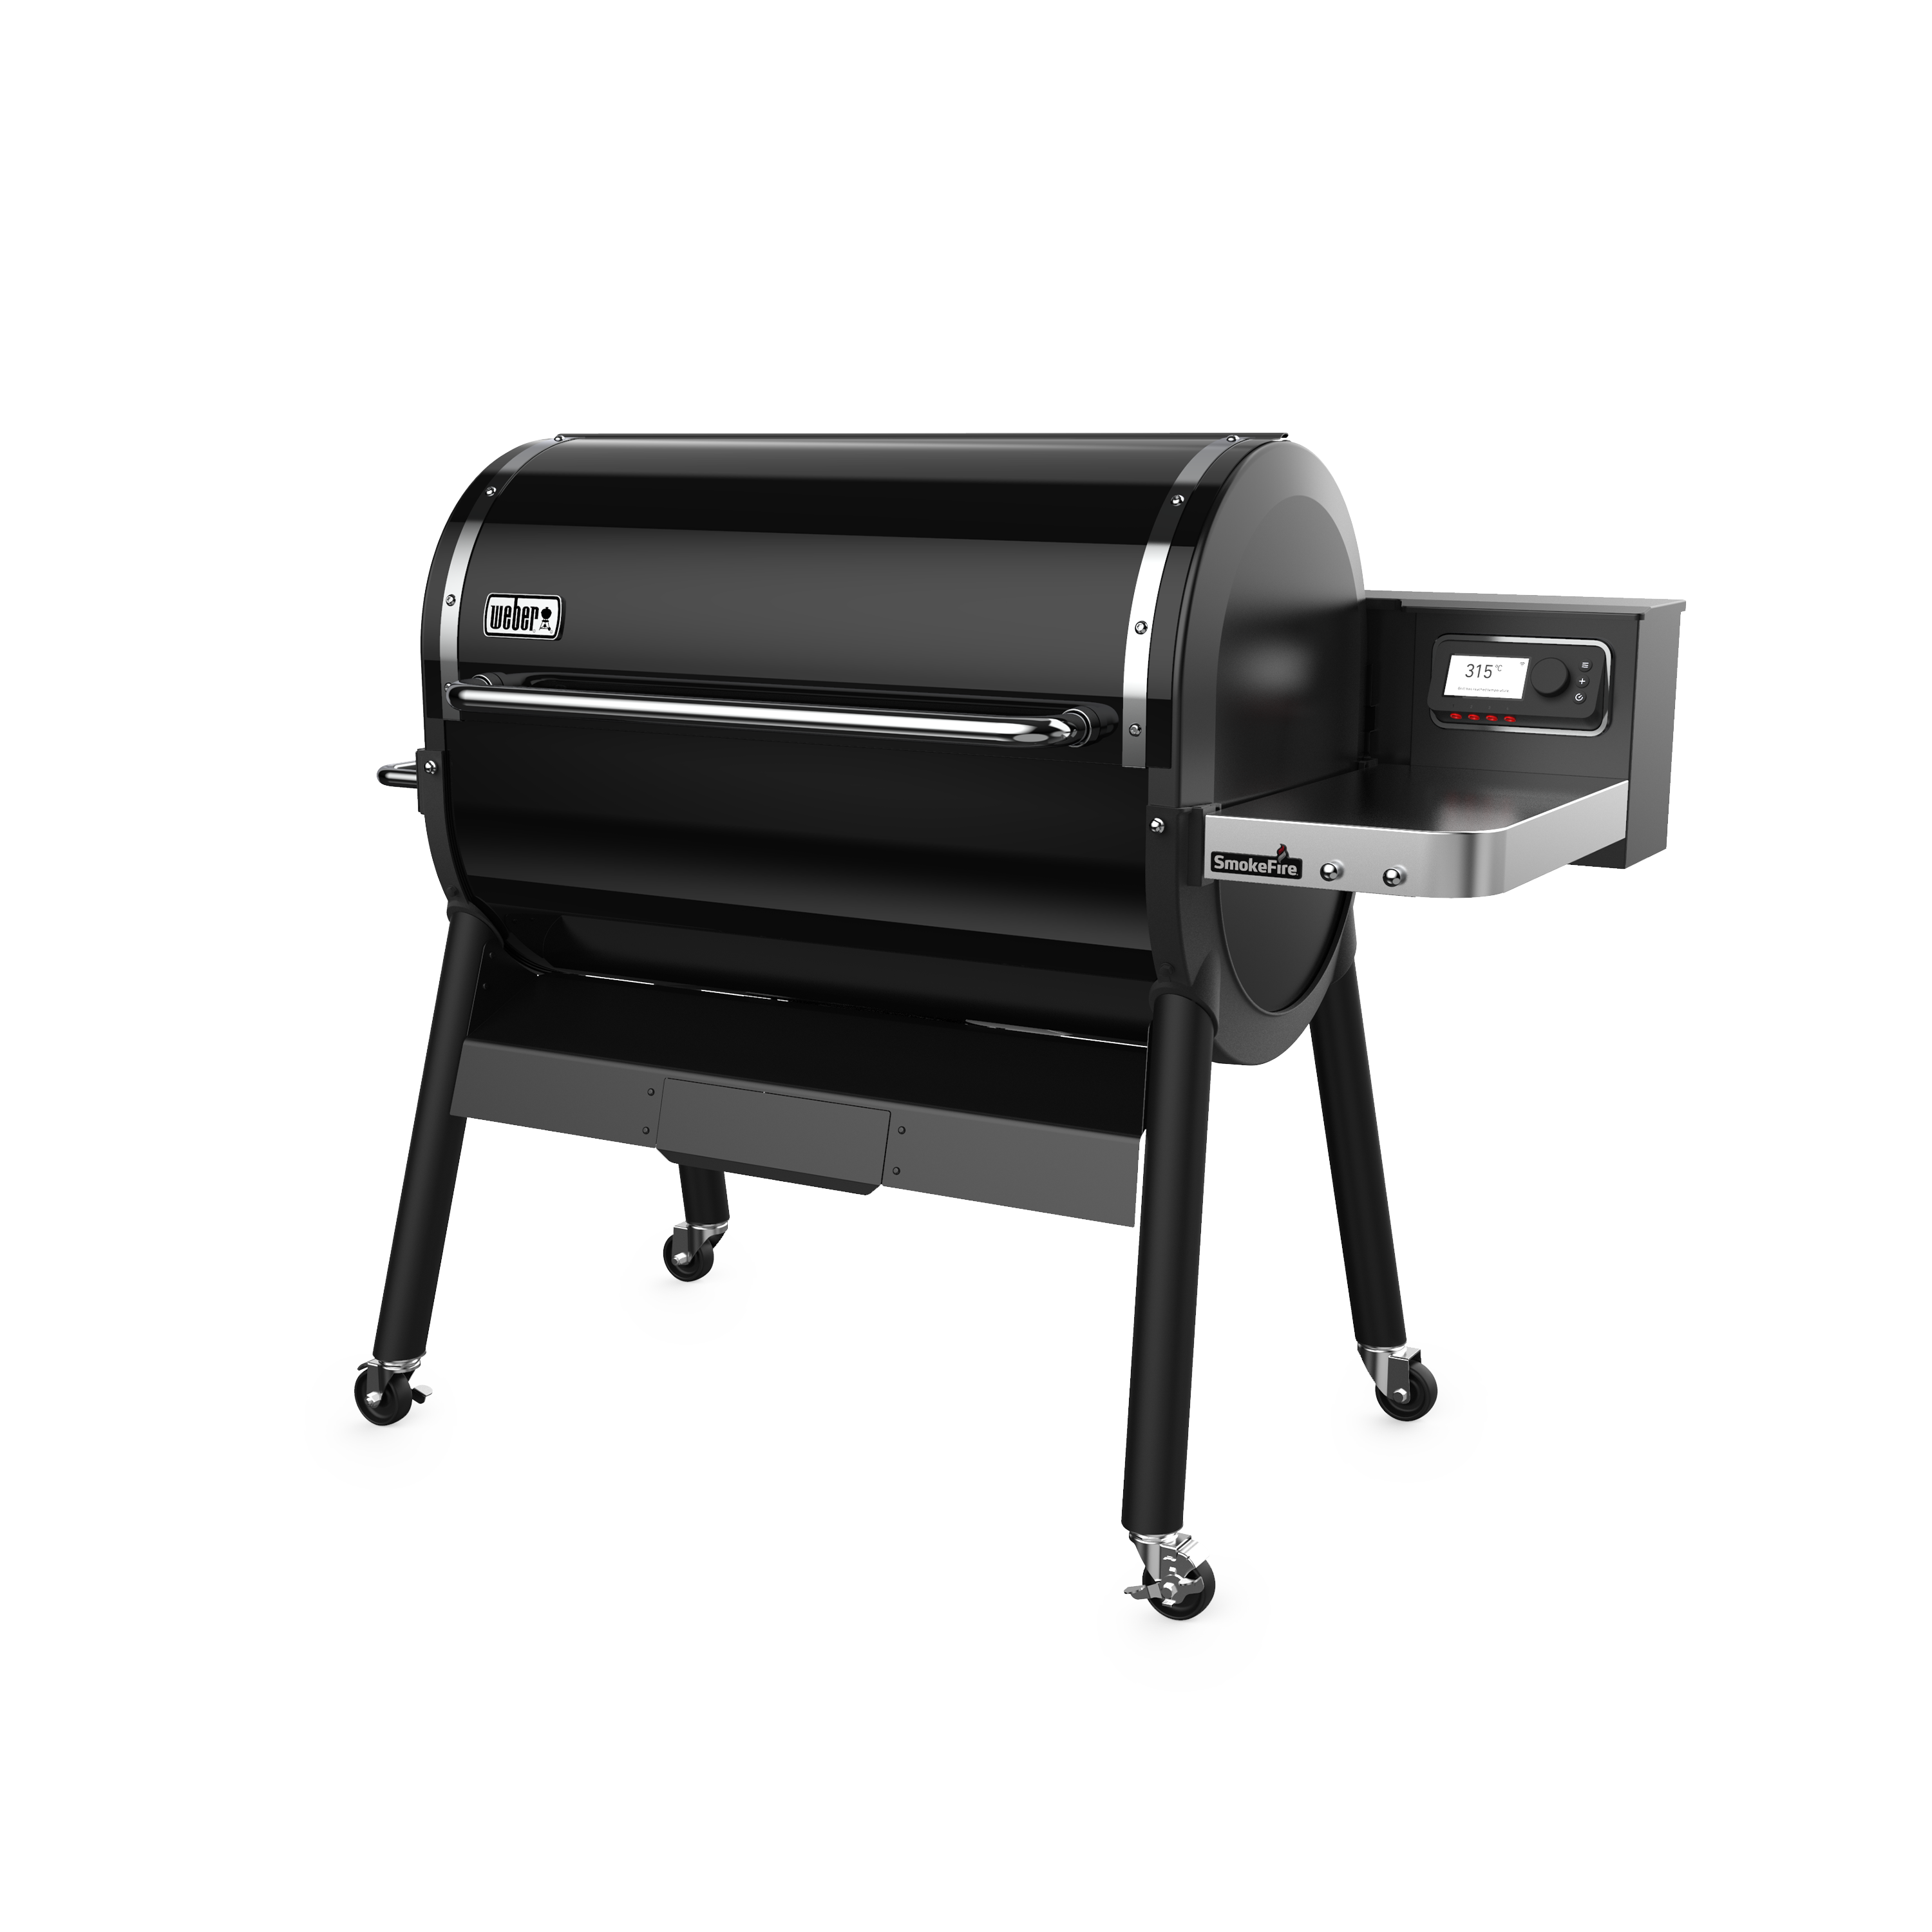 SmokeFire Ex6 GBS Pelletbarbecue